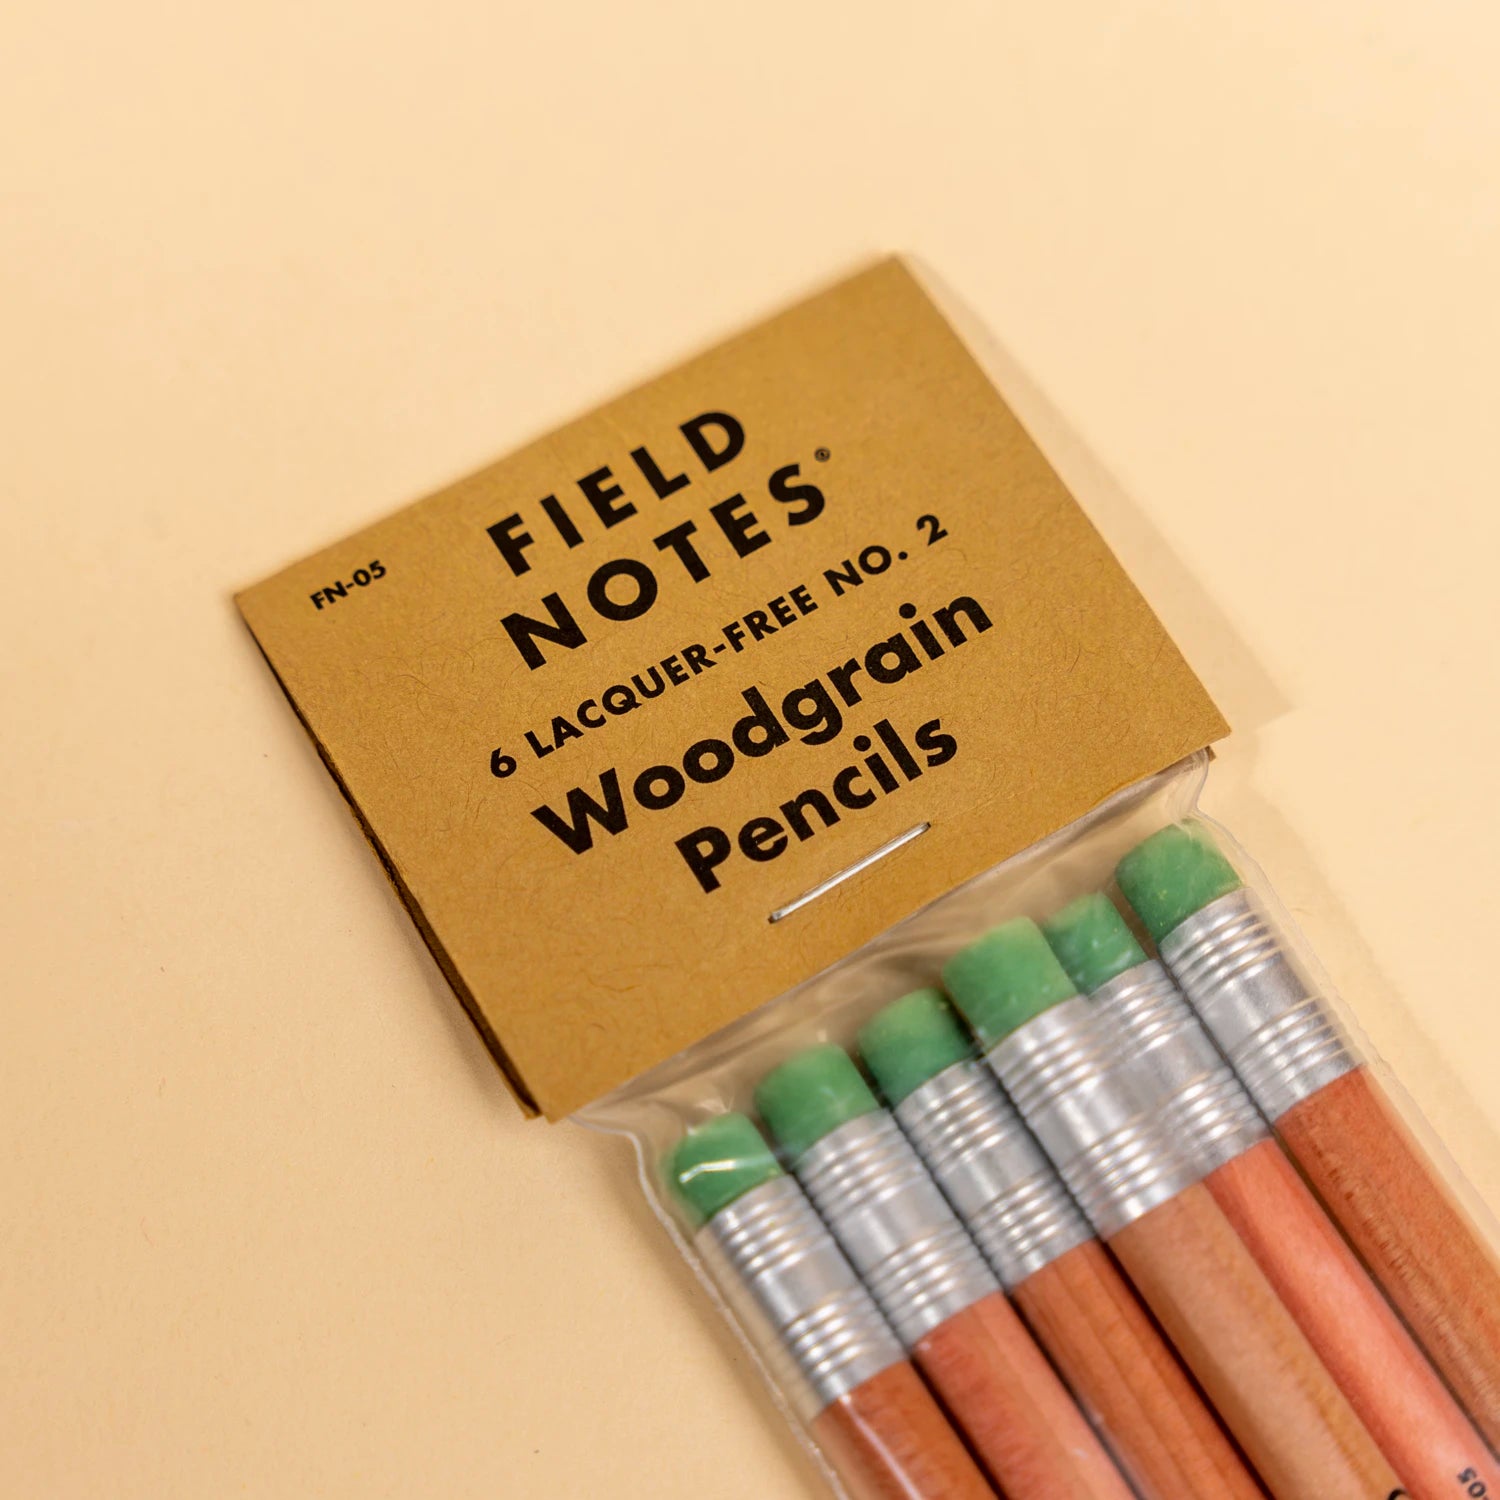 Wood Grain Pencils 6 pack ⎟FIELD NOTES⎟LE COMPTOIR AMERICAIN